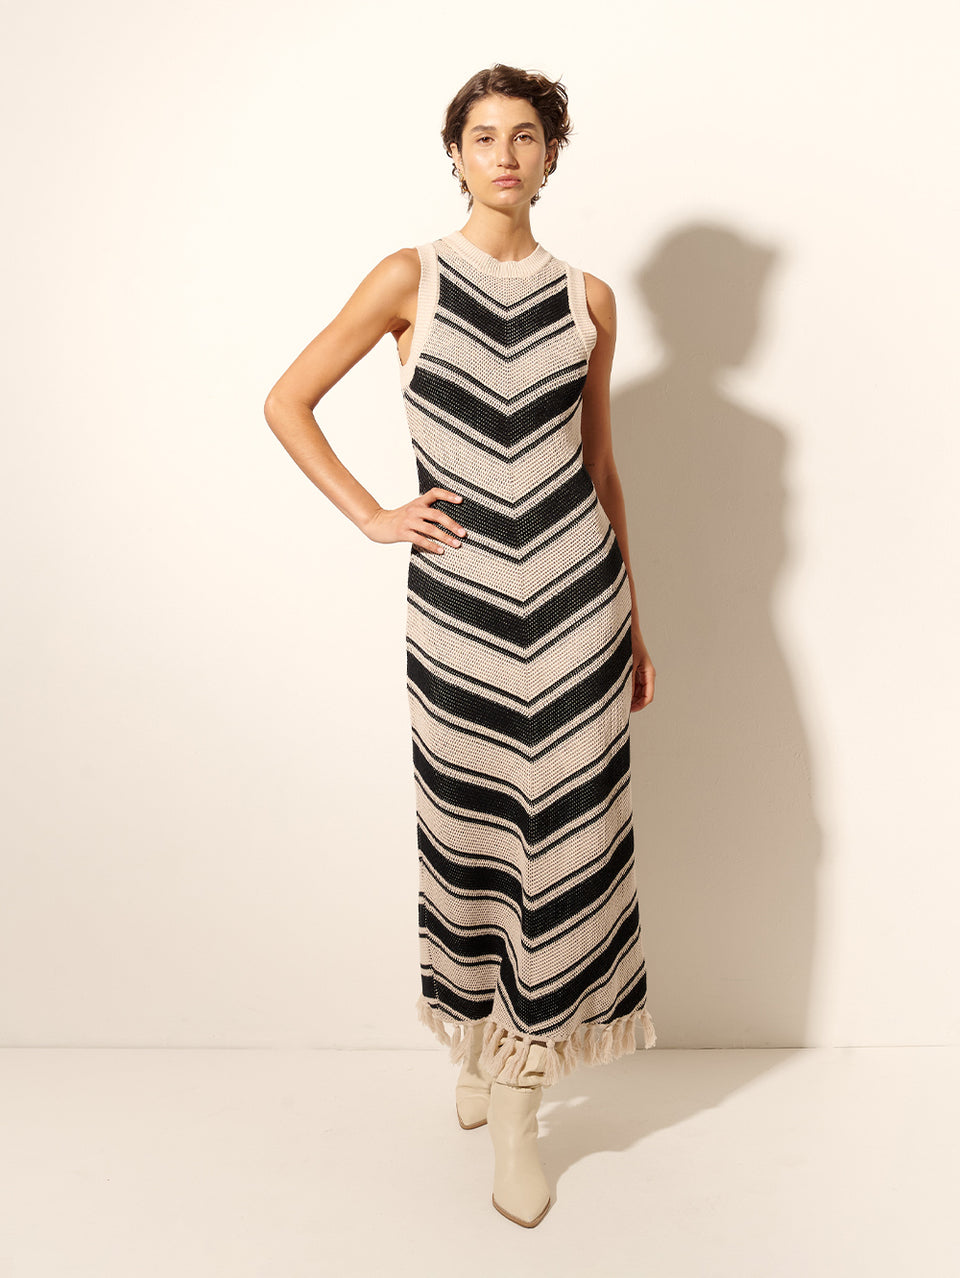 Shop Midi Dresses Australia: Floral, Casual & More | KIVARI